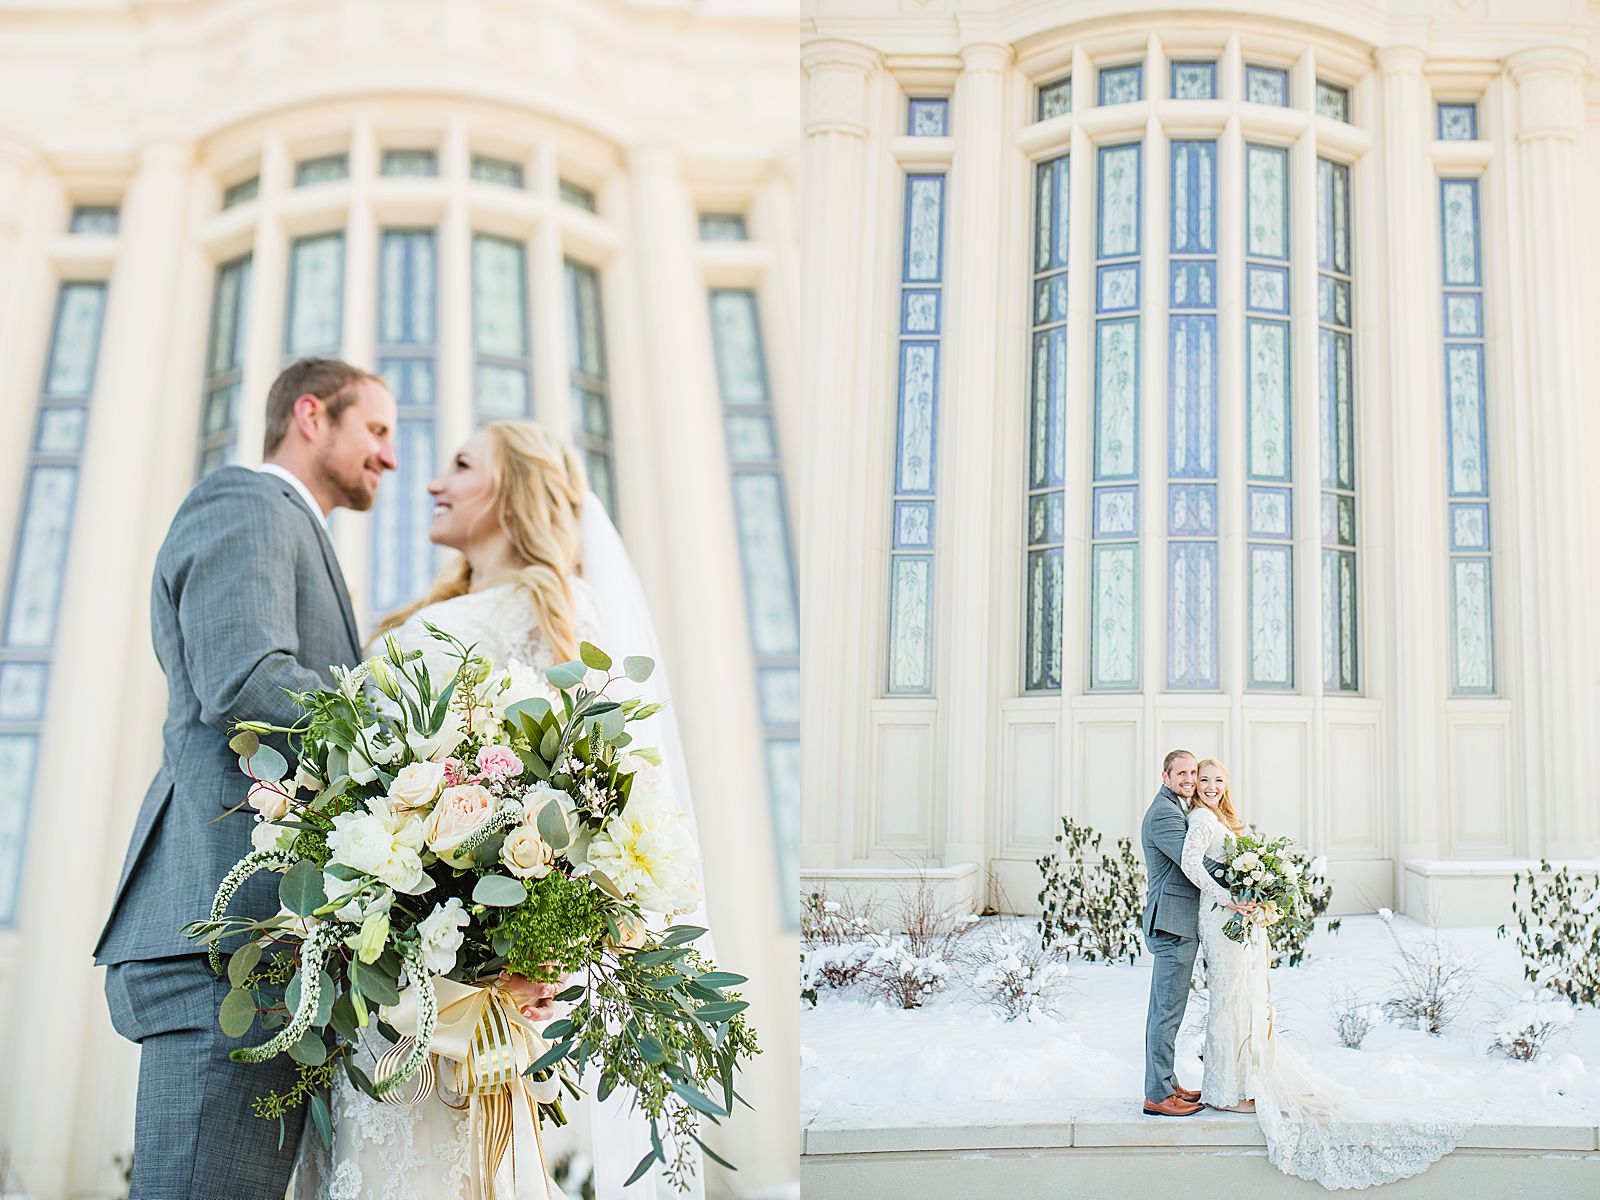 Payson Utah Temple | Winter Wedding